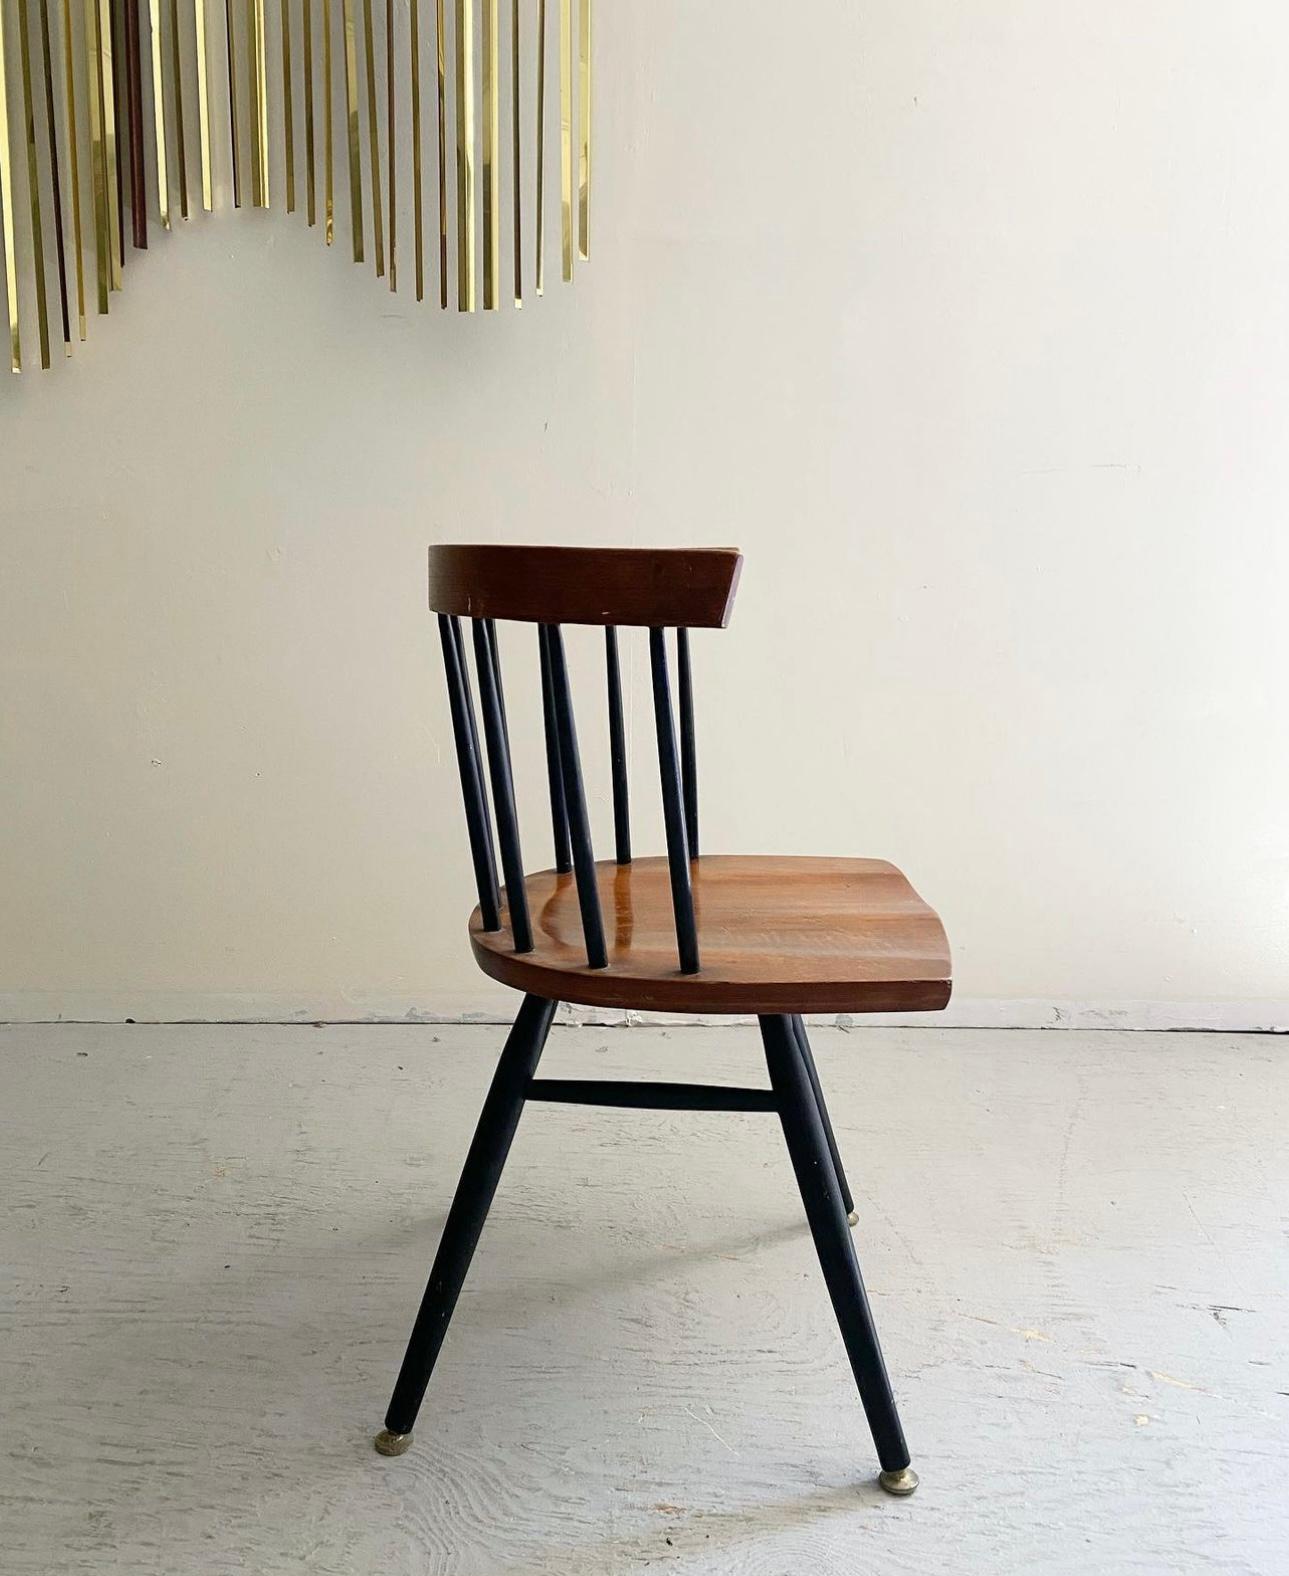 Walnut Iconic Mid-Century Modern Spindle Back “N19” Chair designed by George Nakashima.